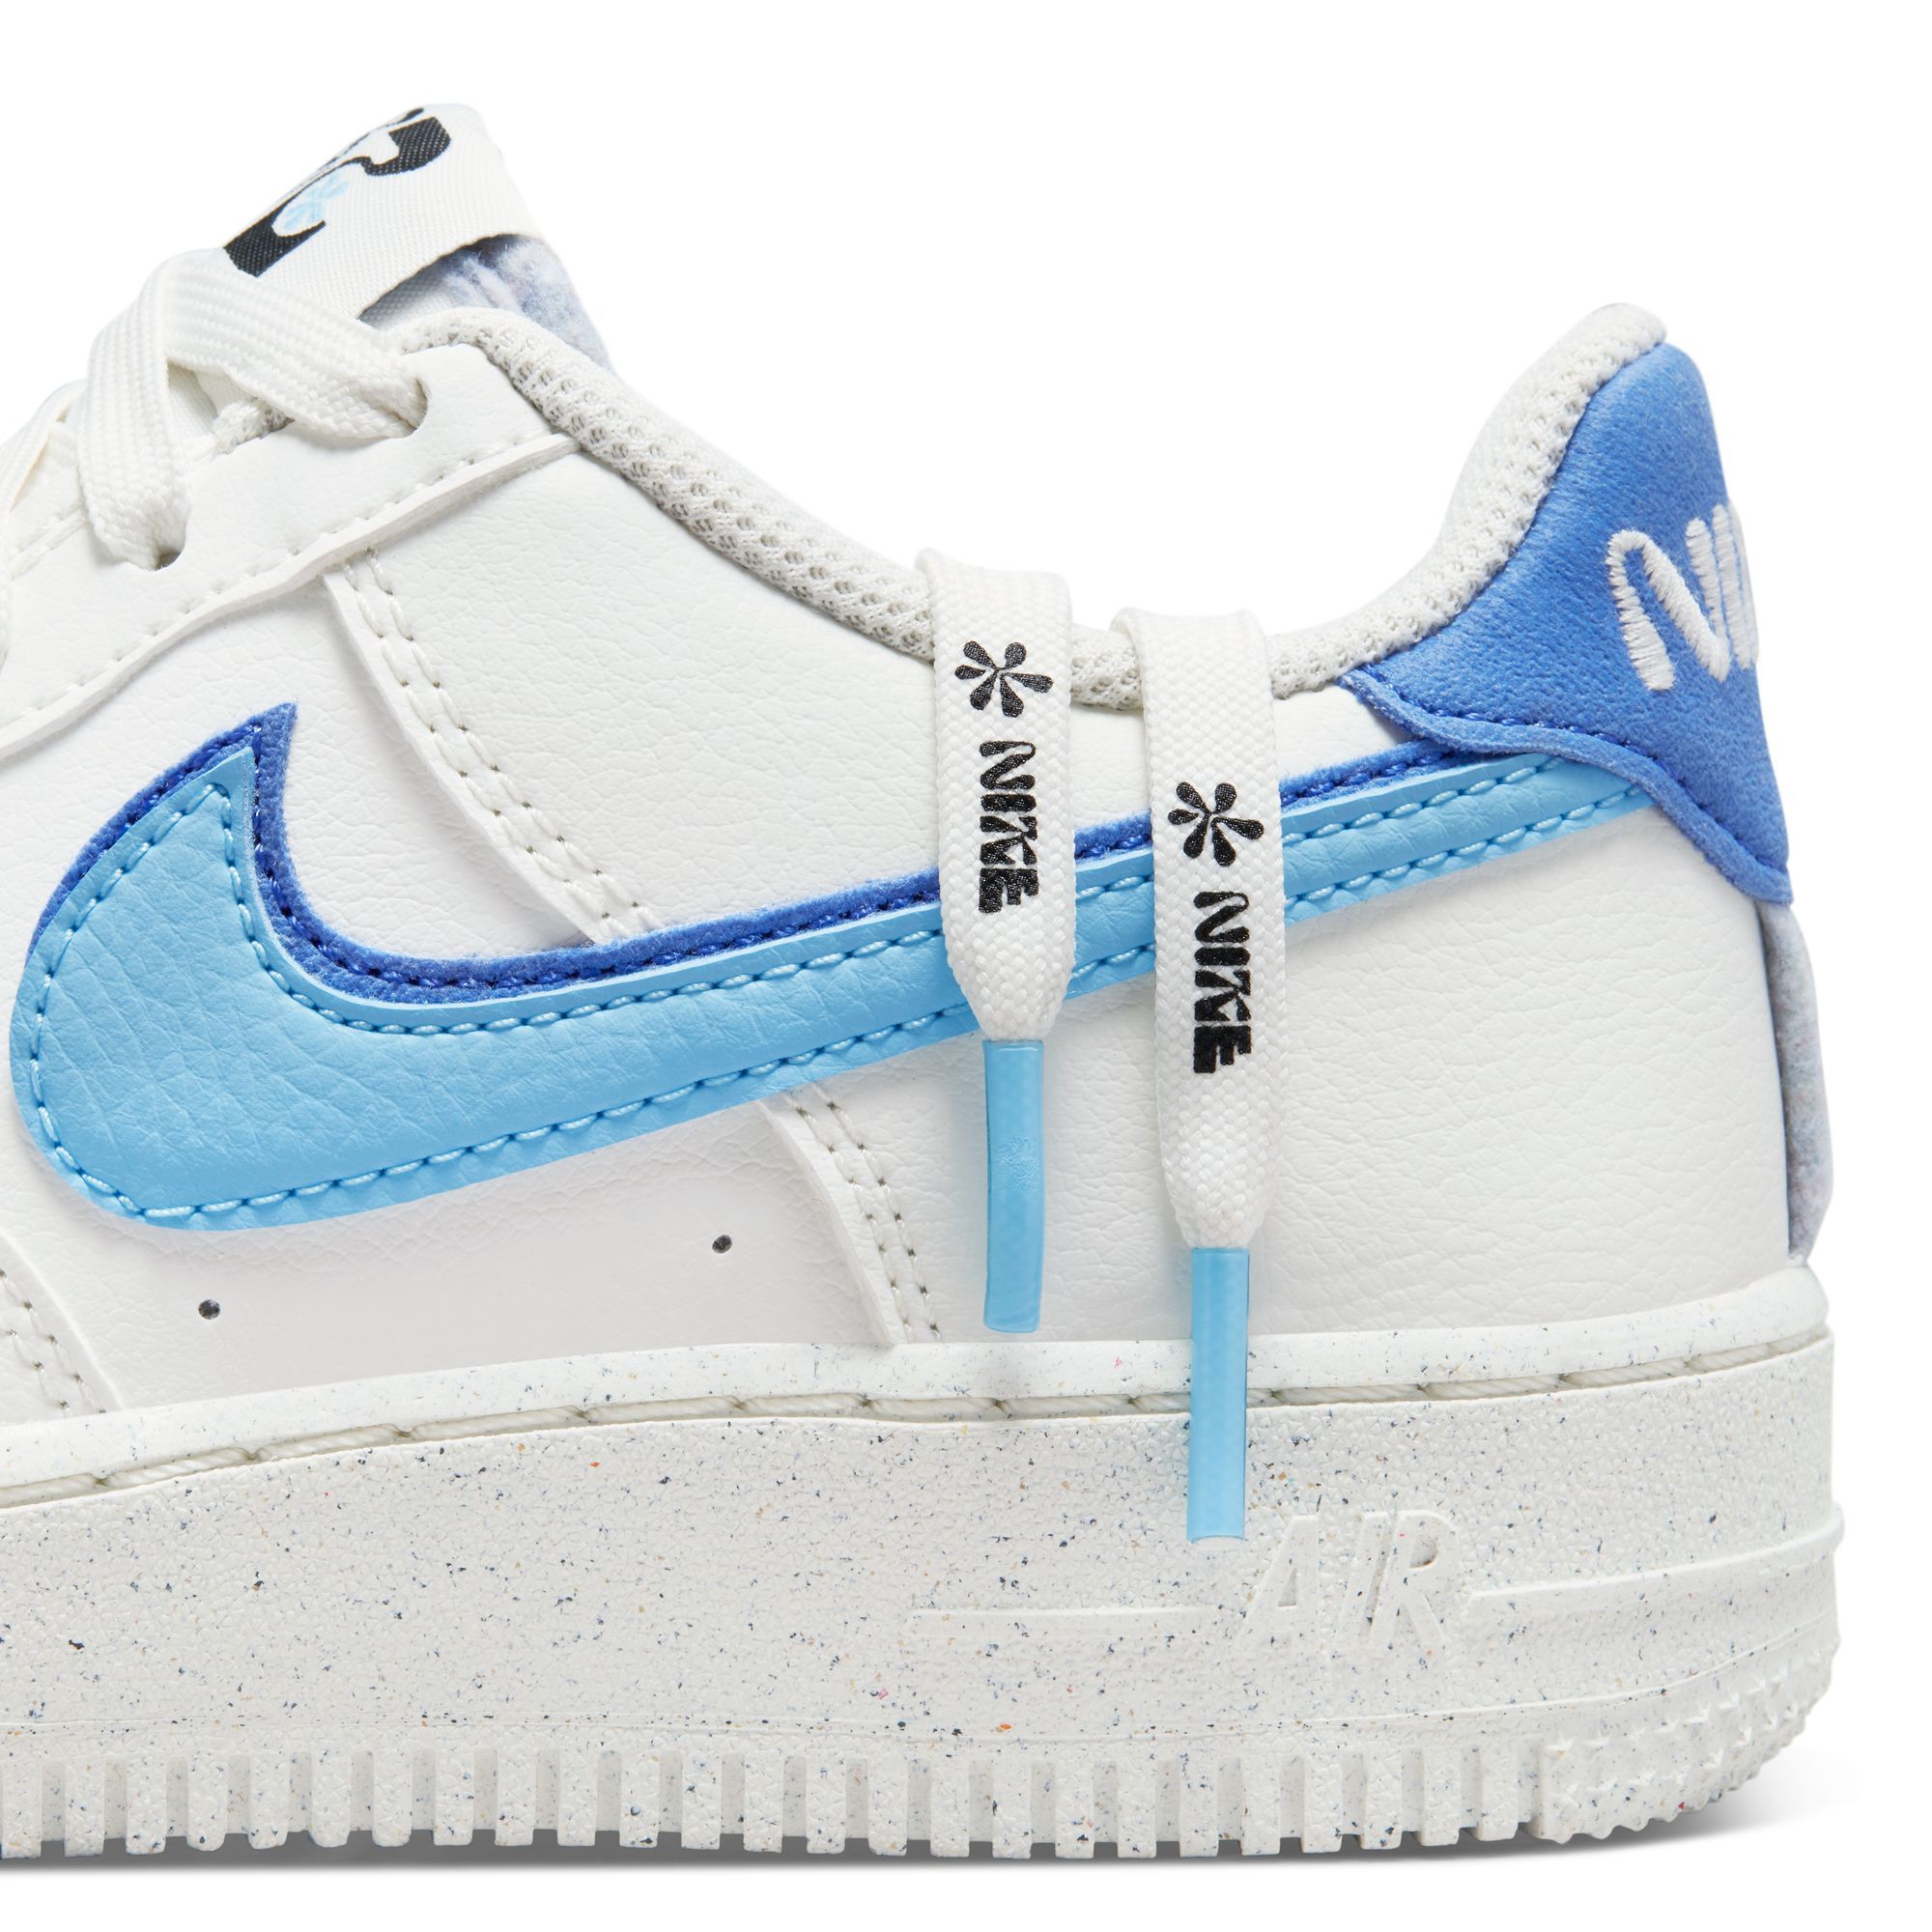 Nike Sportswear AIR FORCE 1 - Zapatillas - sail/blue chill/med